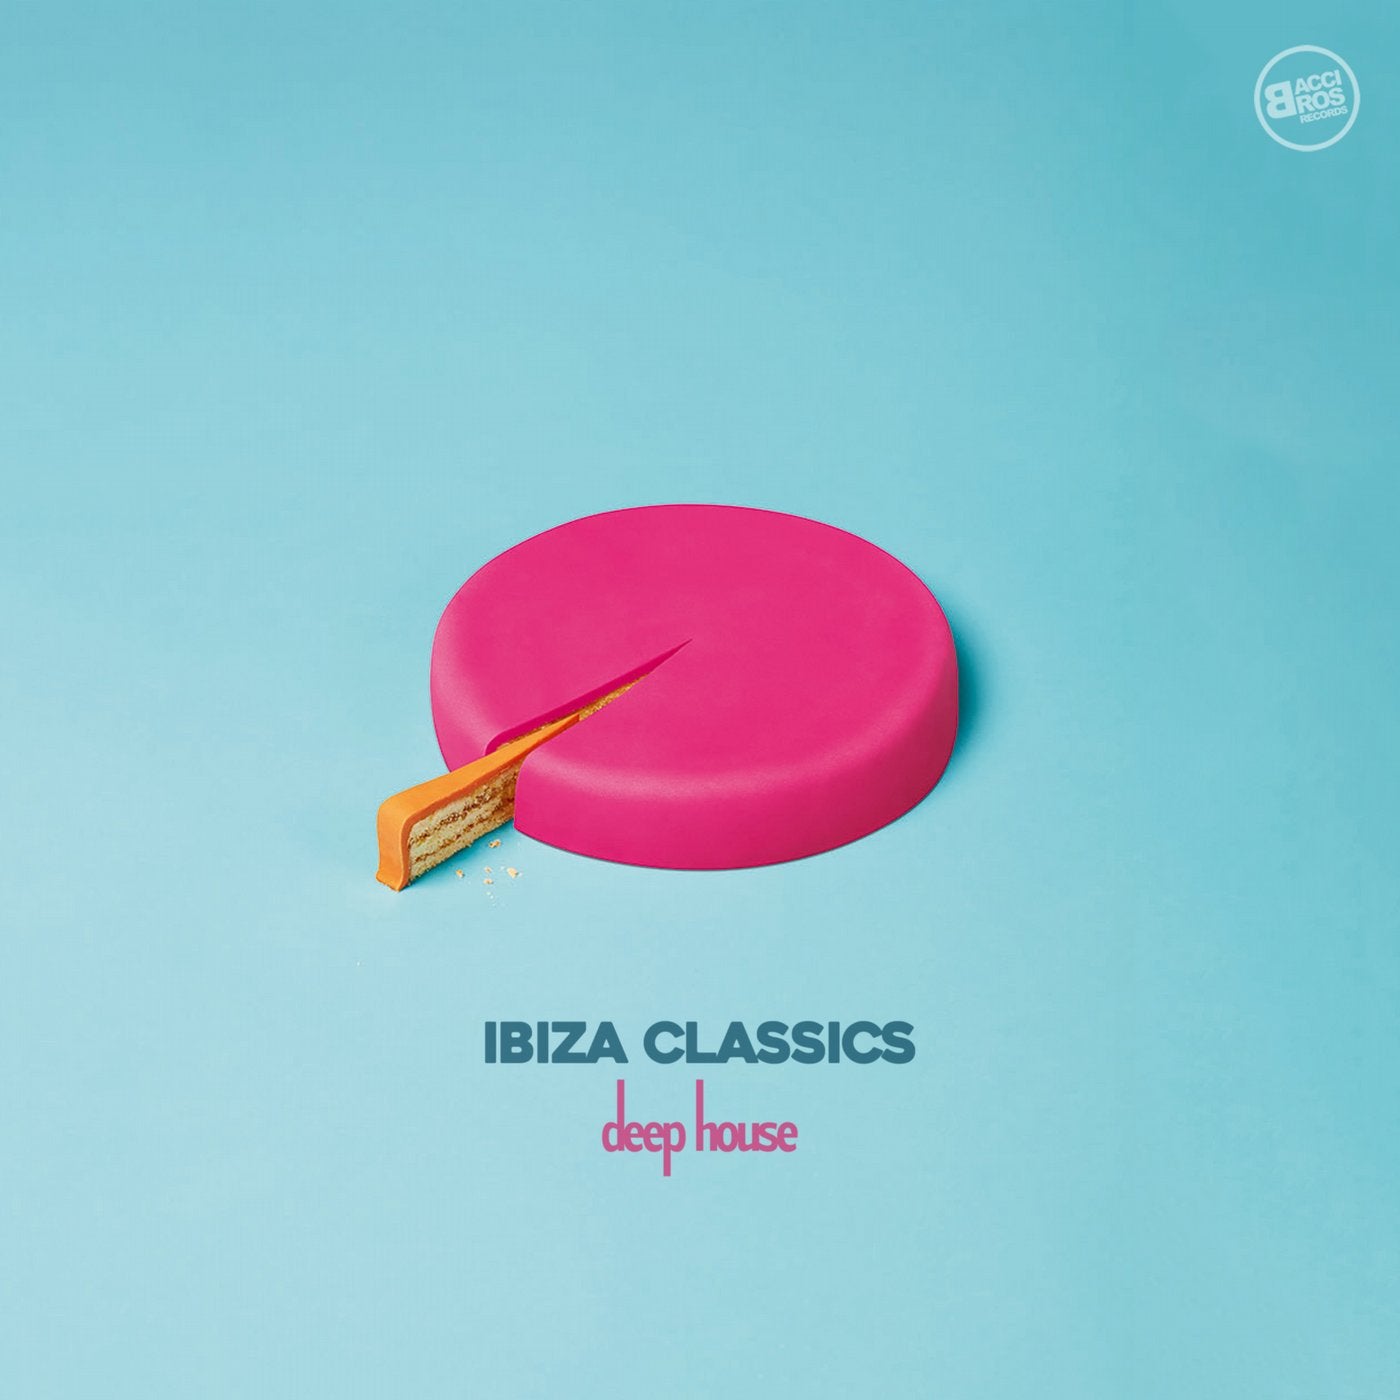 Ibiza Classics Deep House